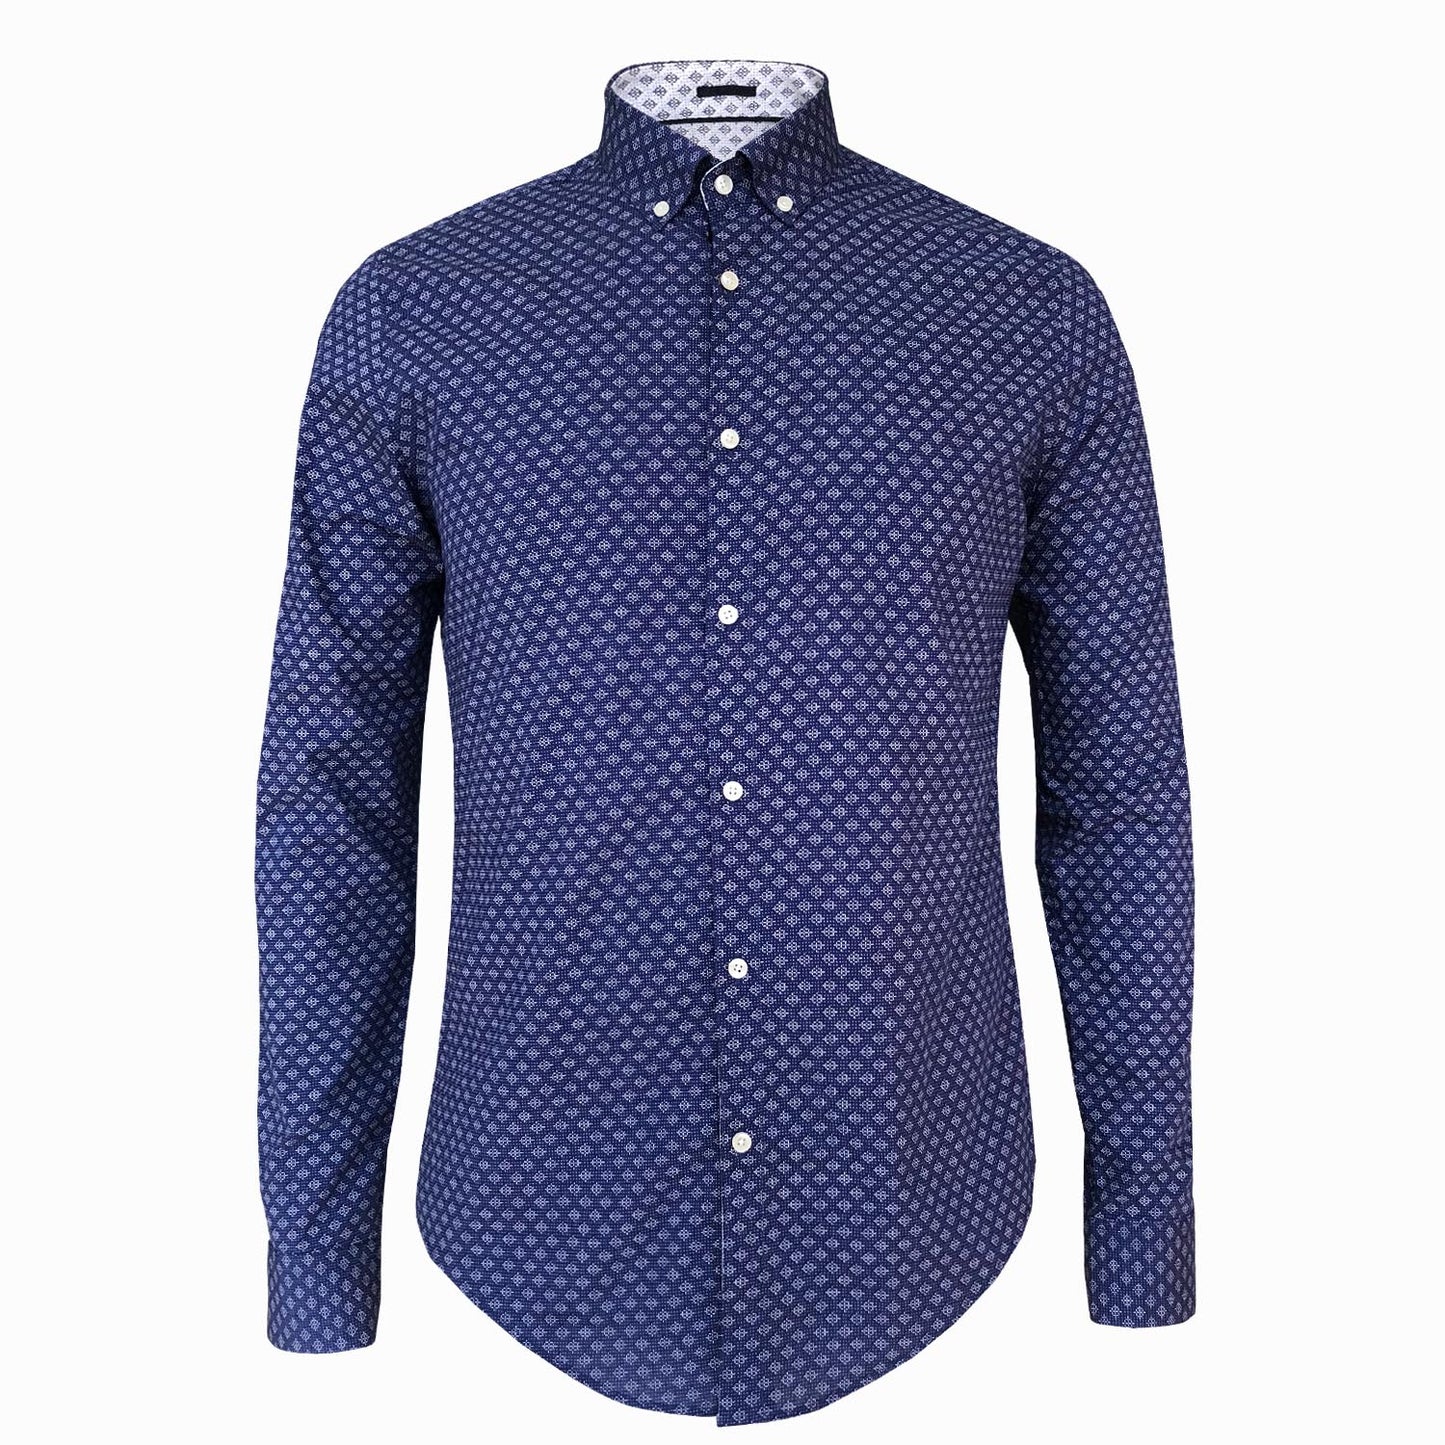 LUXE HOMME SELECT - Premium Oxford Long Sleeve Shirt (Miles) - LabelledUp.com